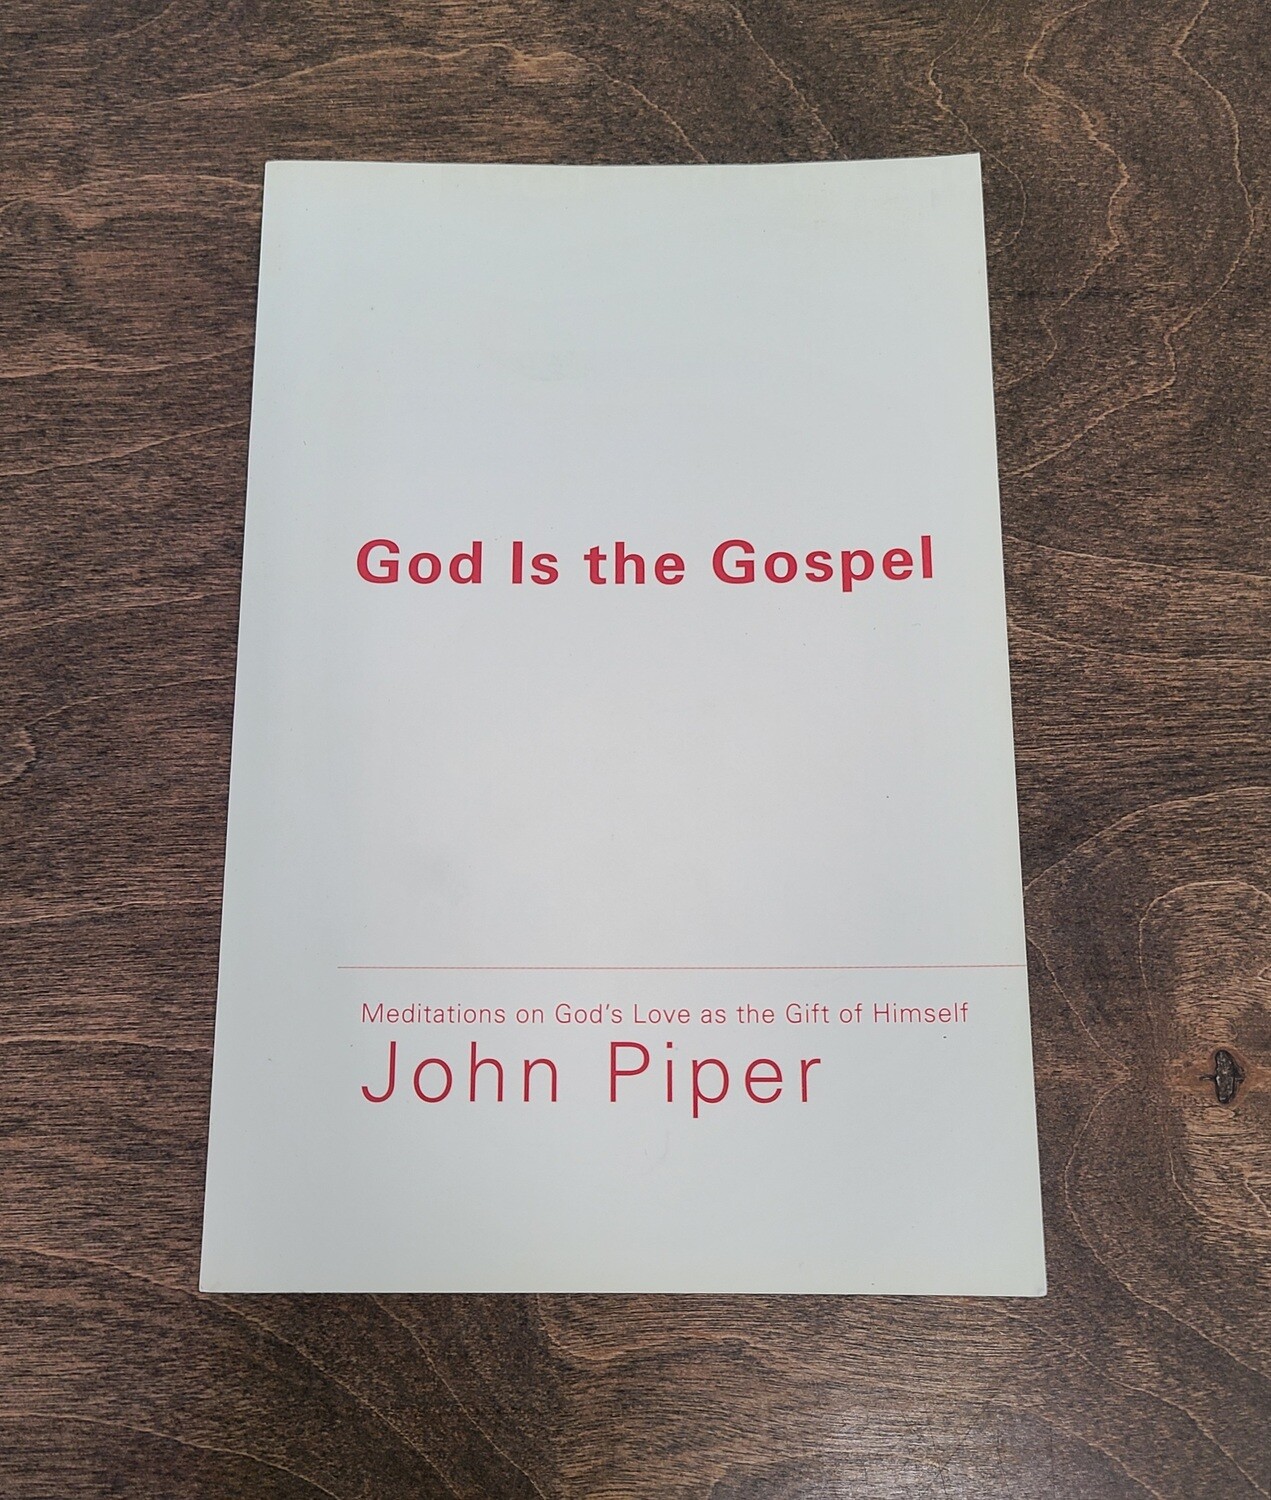 God is the Gospel by John Piper